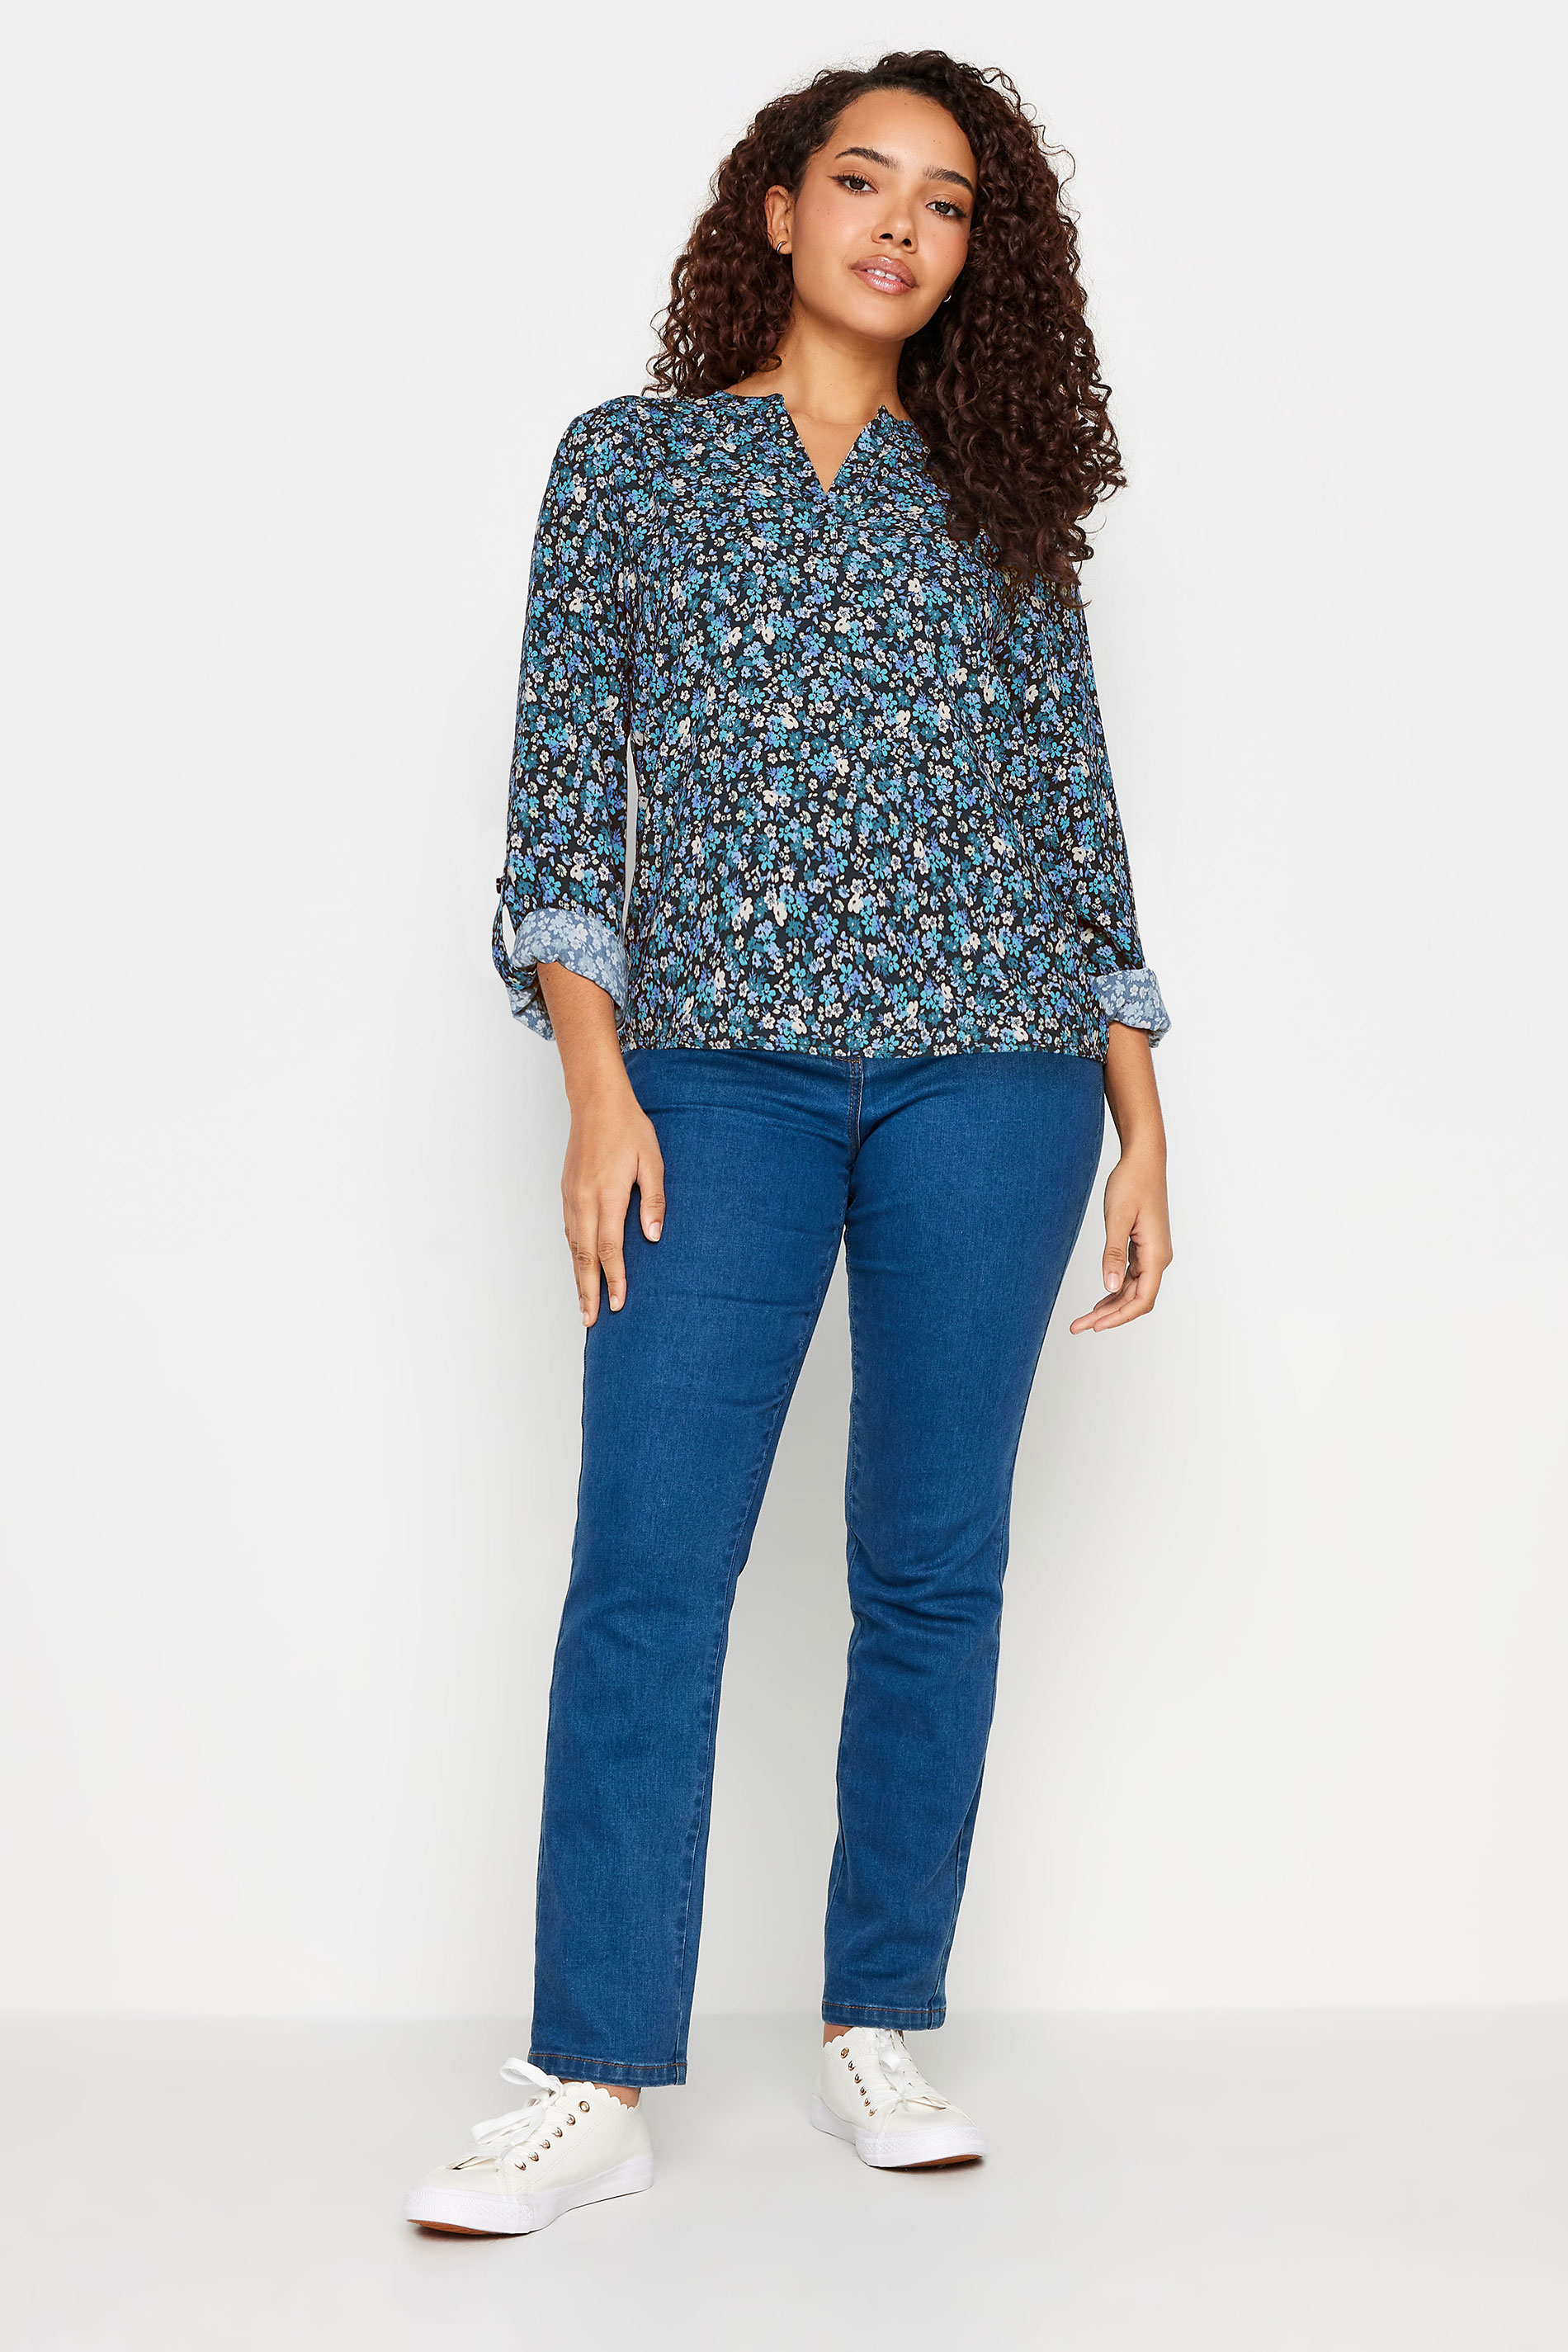 M&Co Blue Ditsy Floral Print V-Neck Shirt | M&Co 2